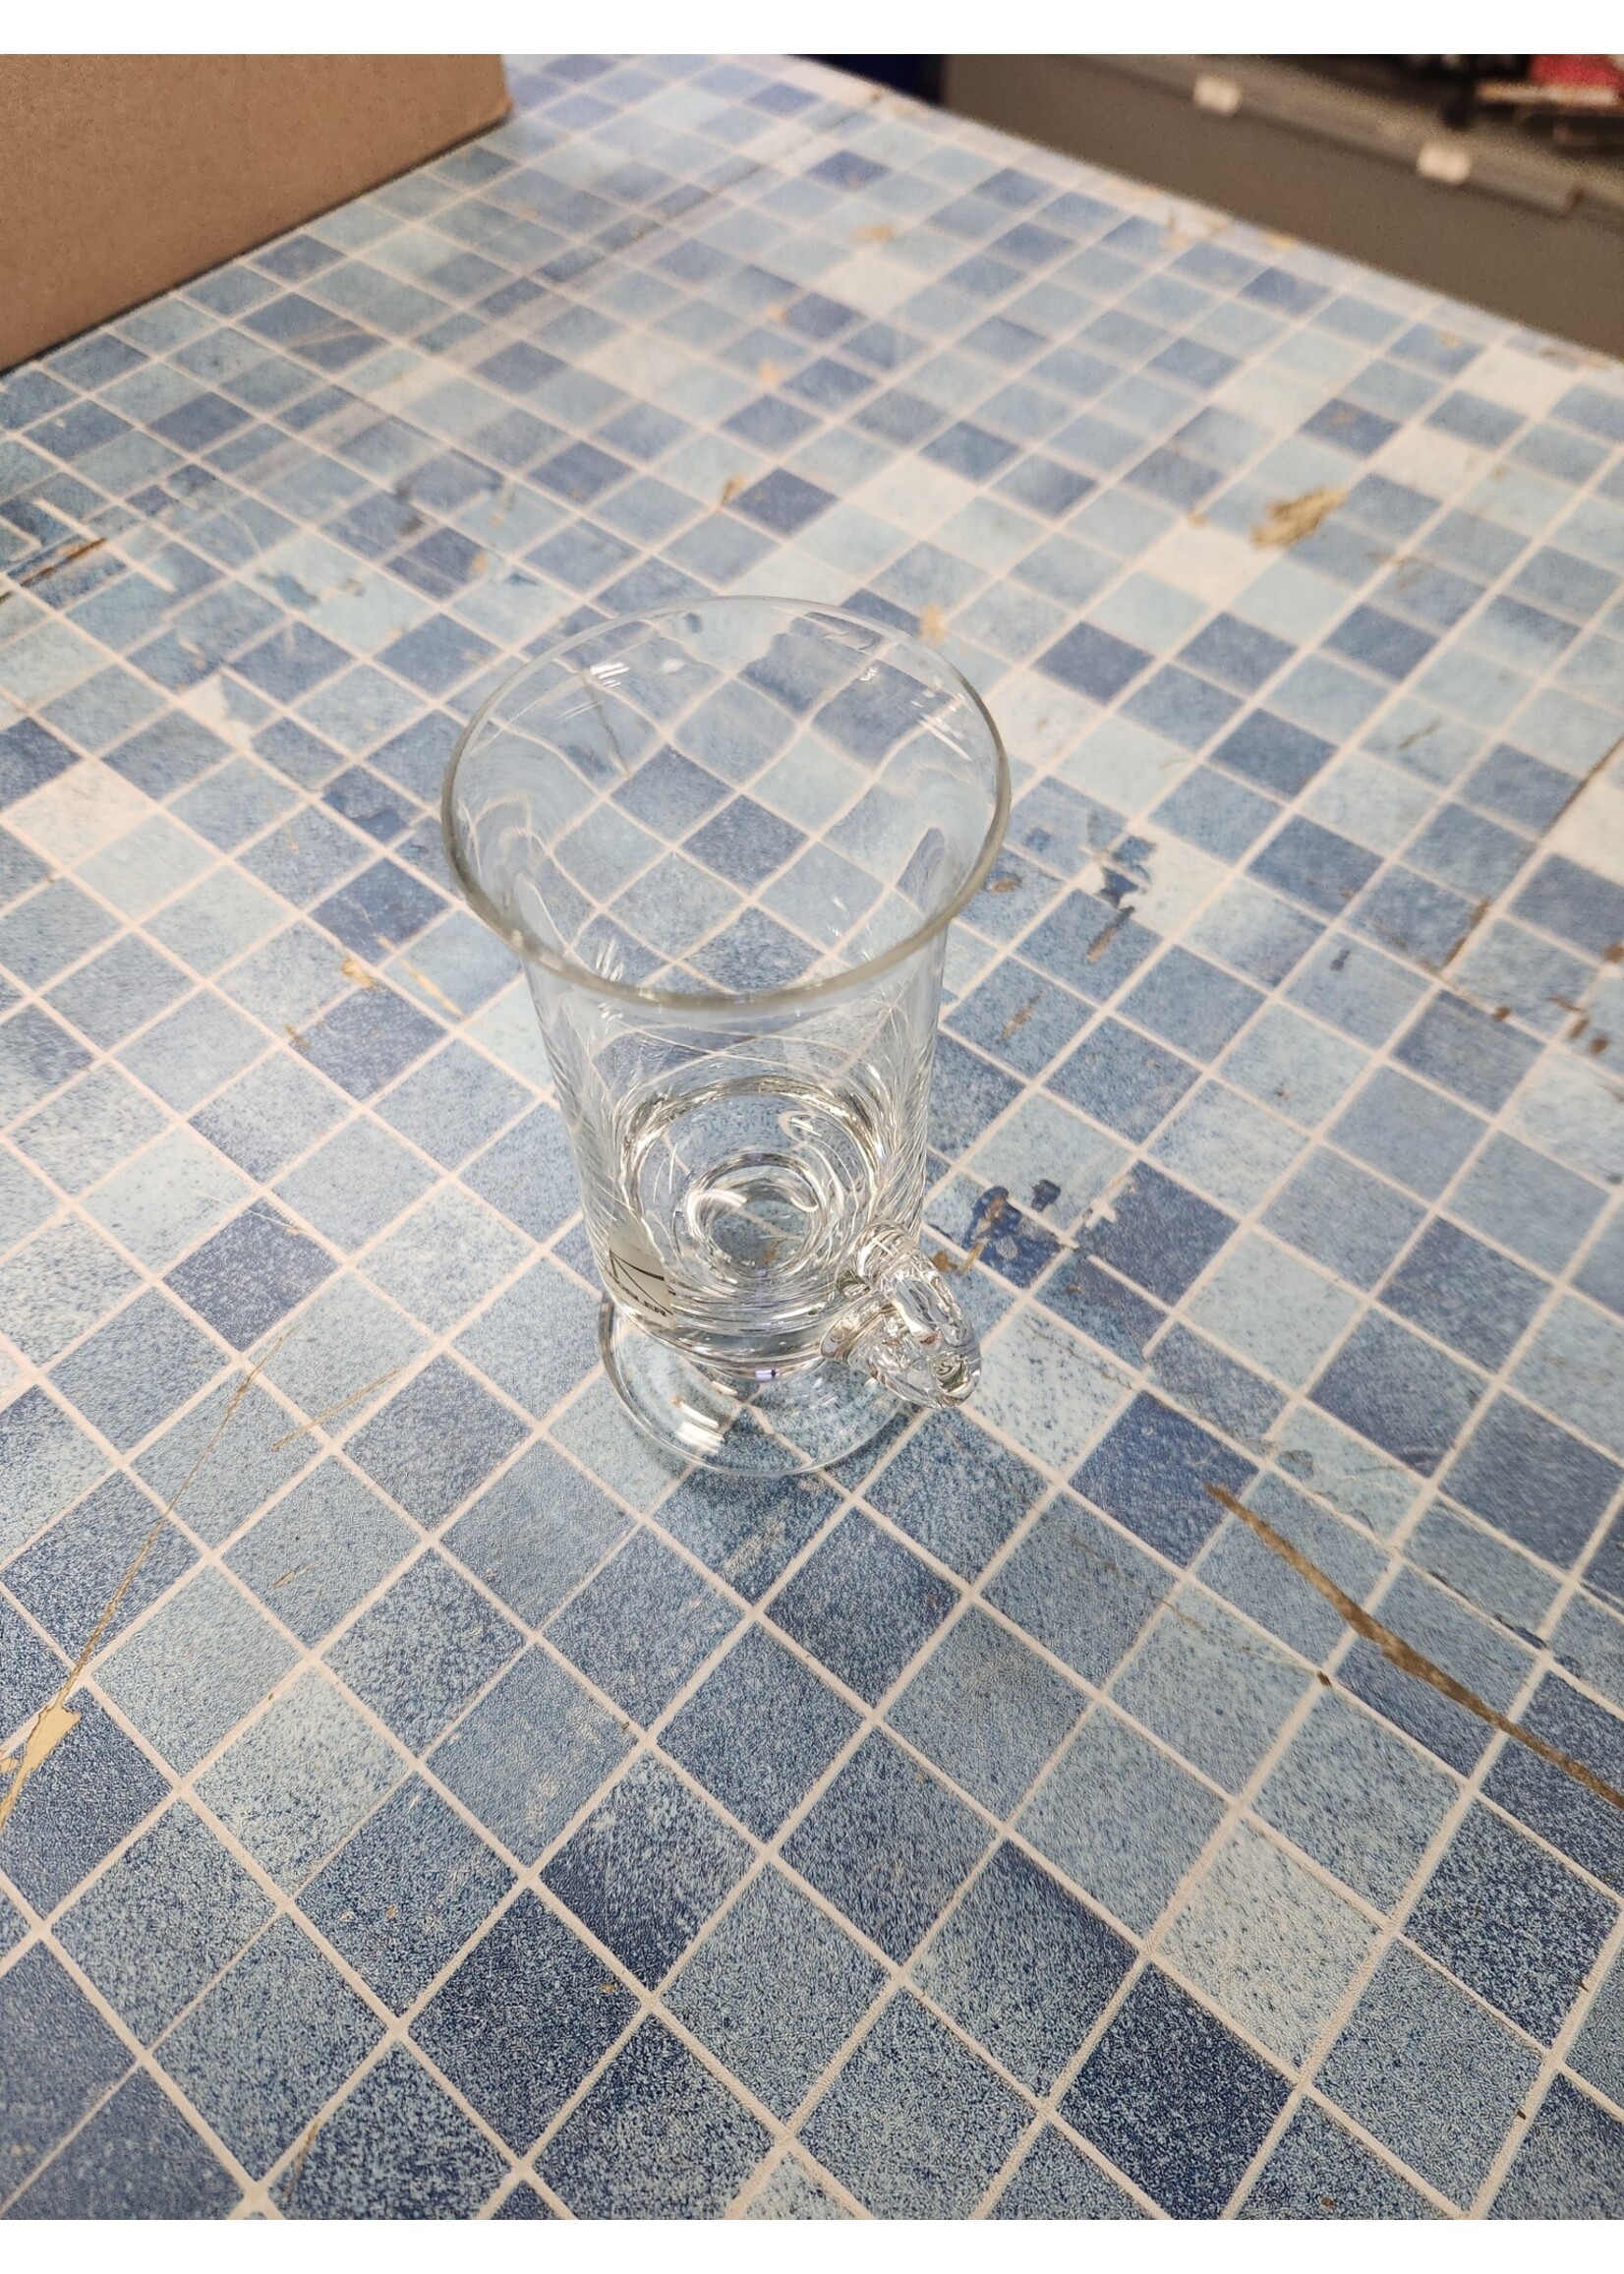 5.5x2.5 Alfred E Knobler Handled Irish Coffee Mug Cup Clear Glass Romania